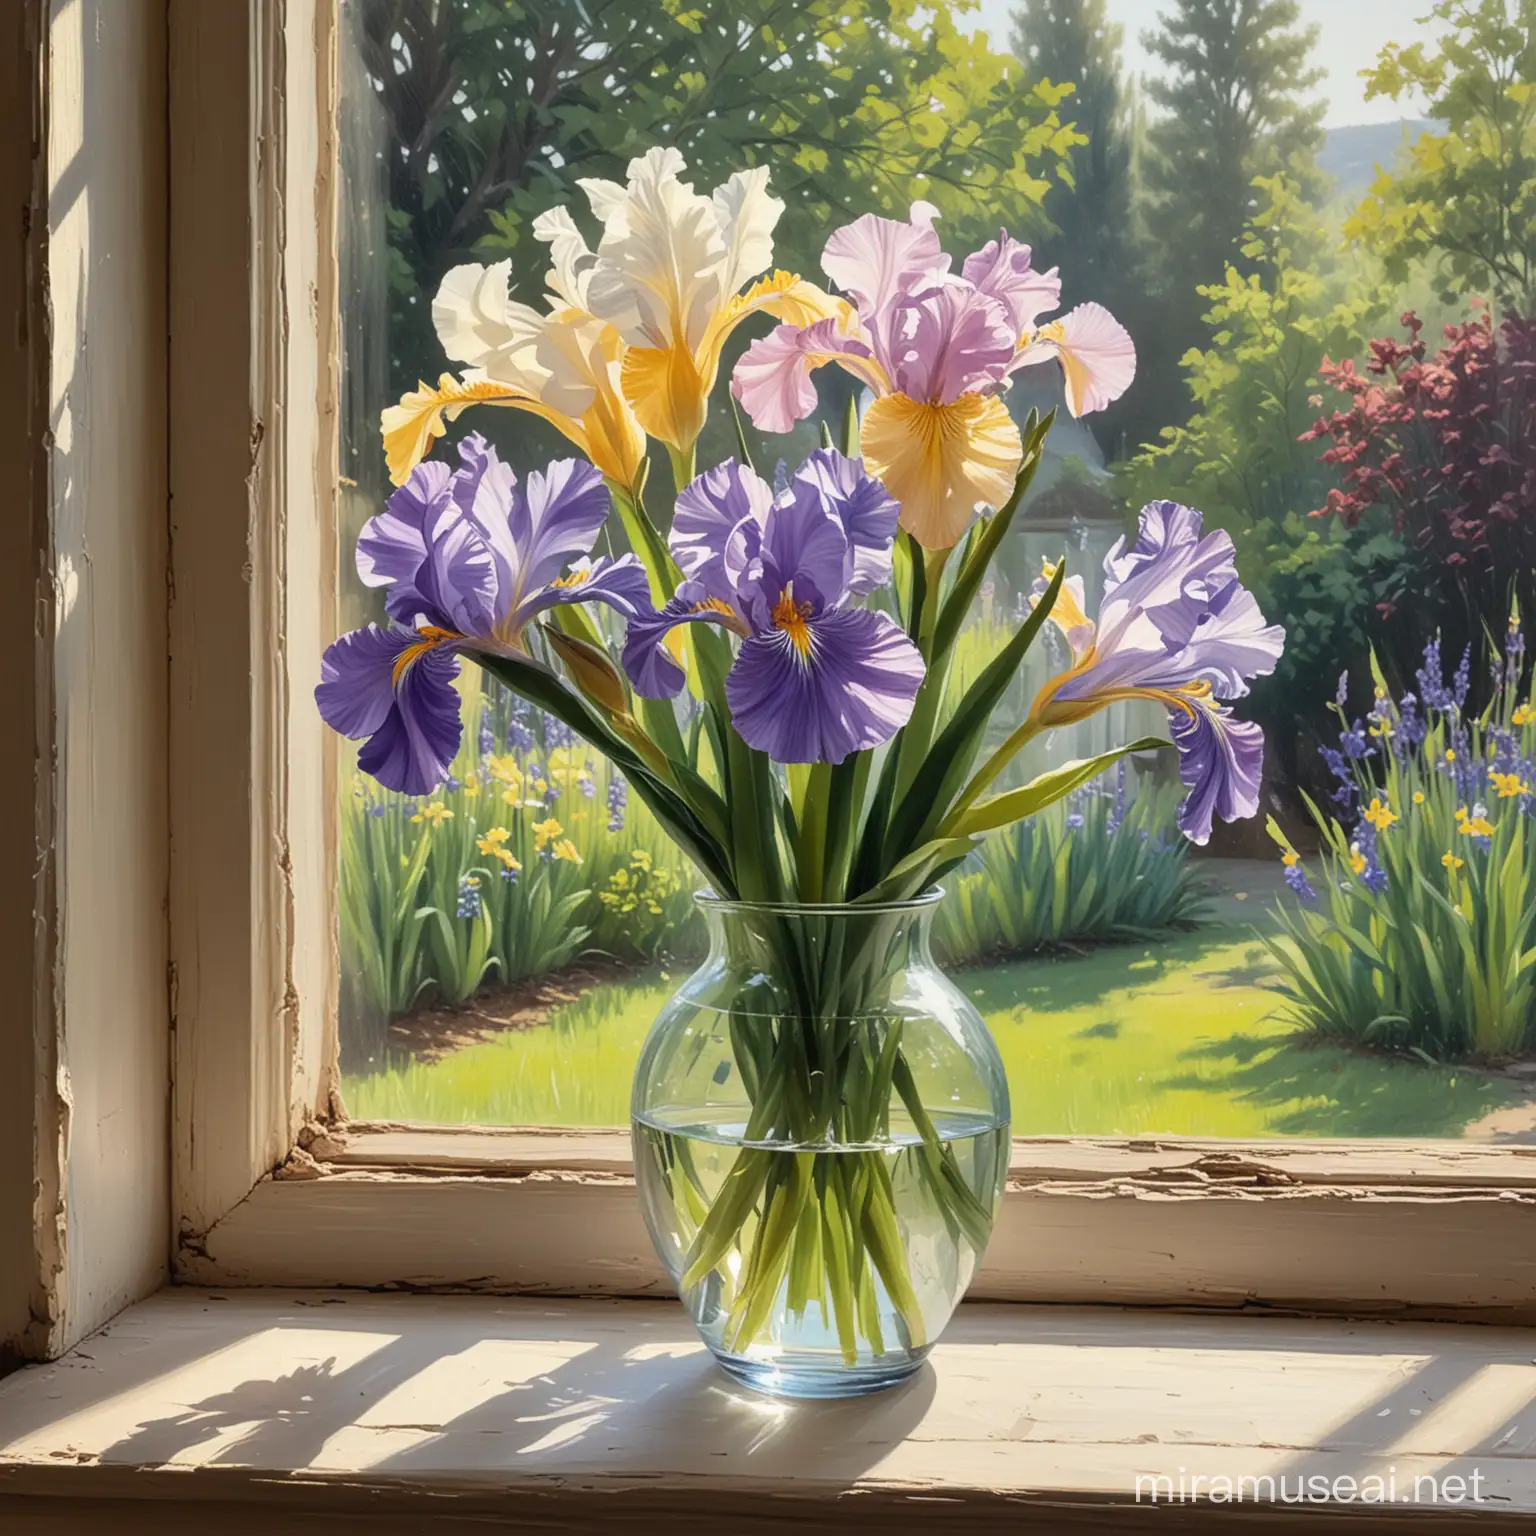 Sunny Vintage Window View of Iris Flowers in Glass Vase